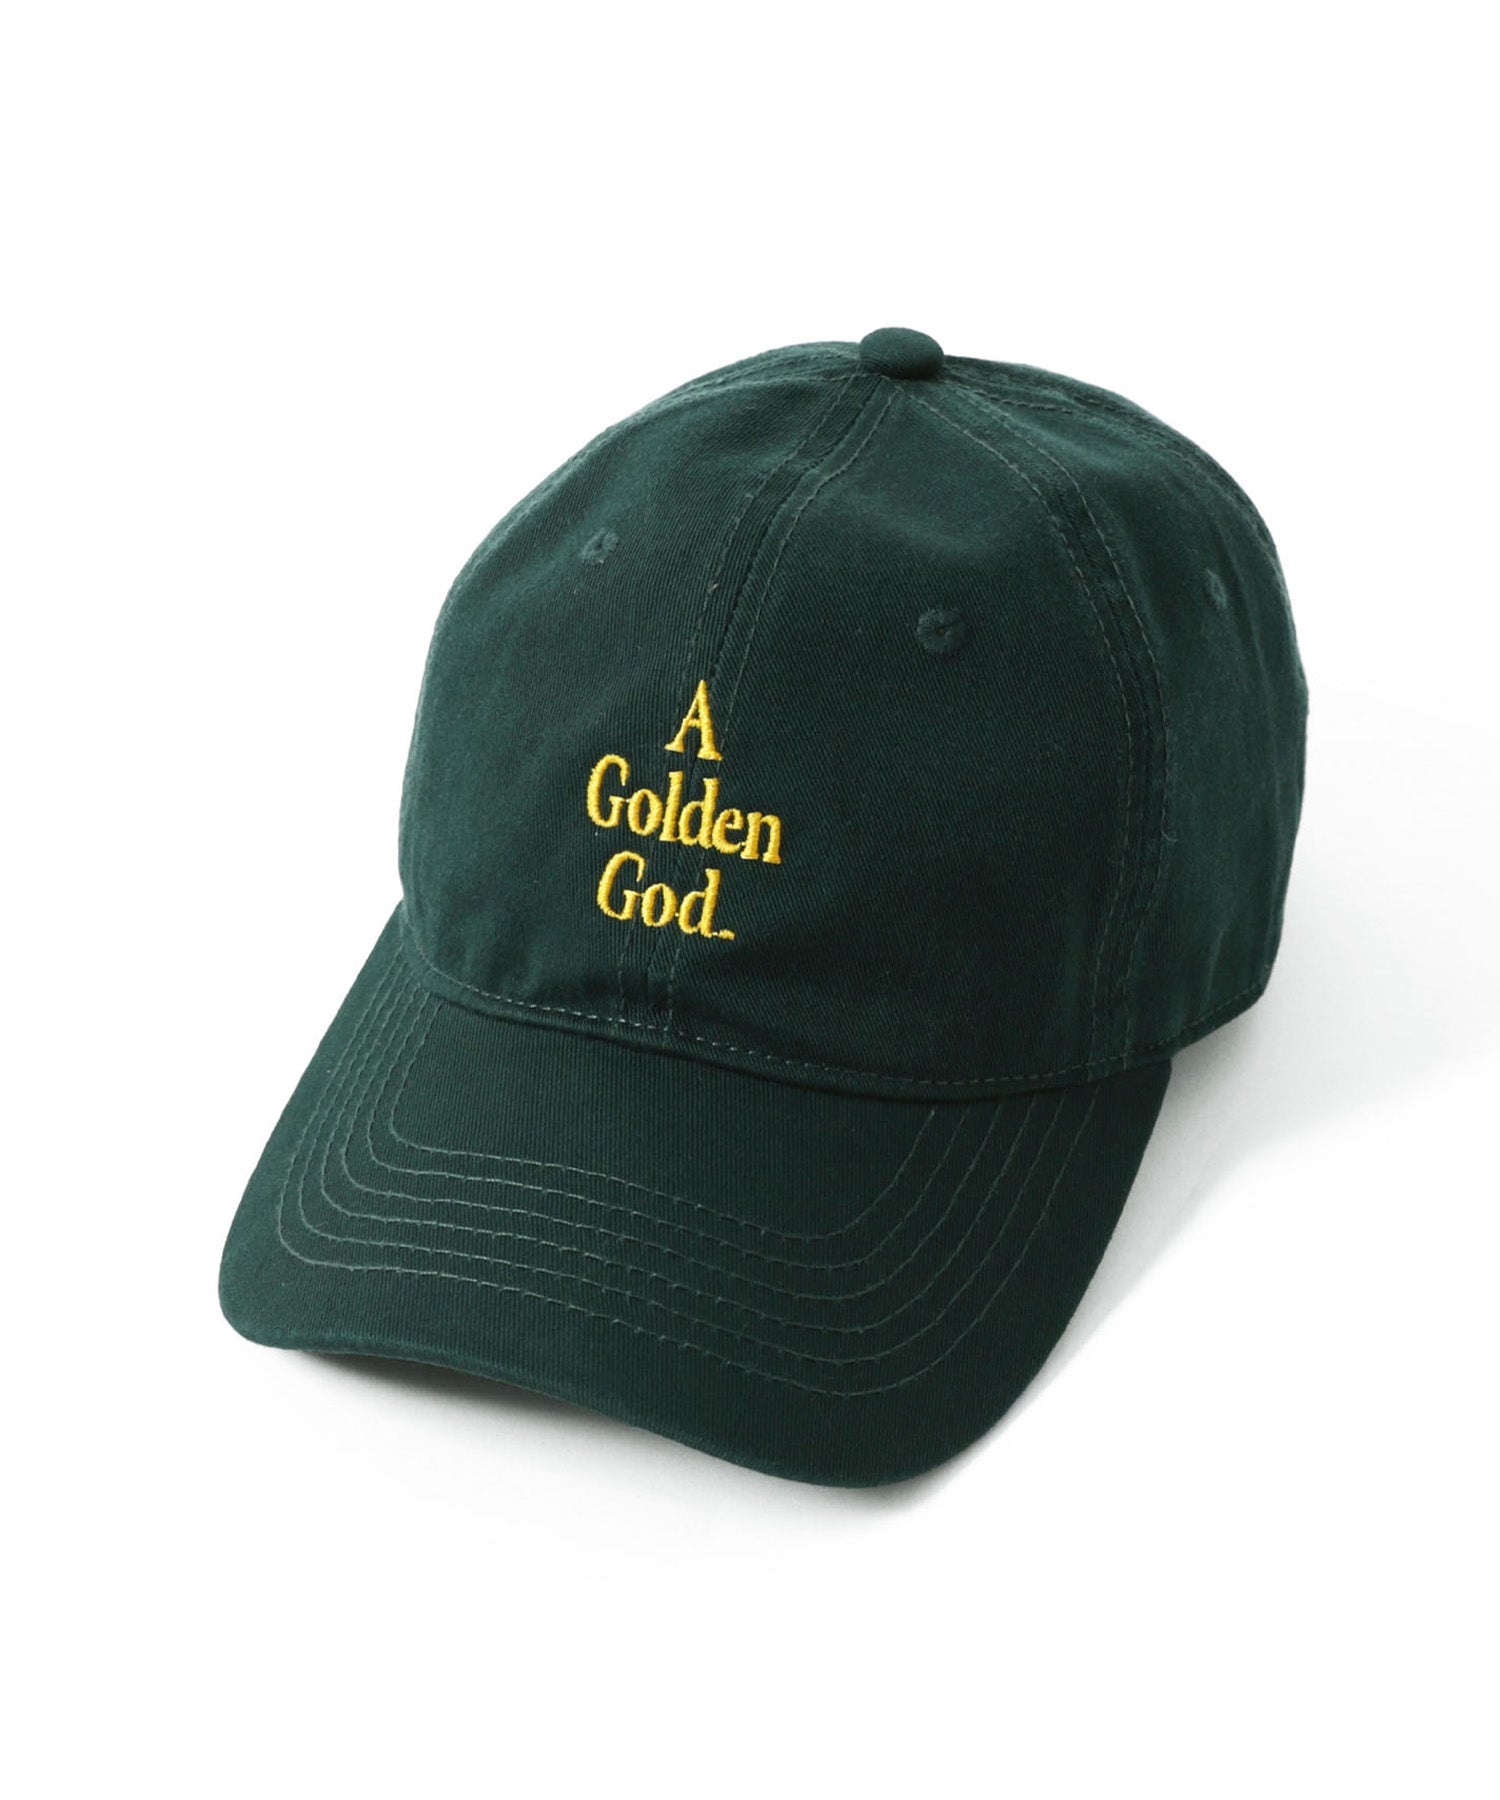 Seymour. "A Golden God" EMBROIDERY CAP